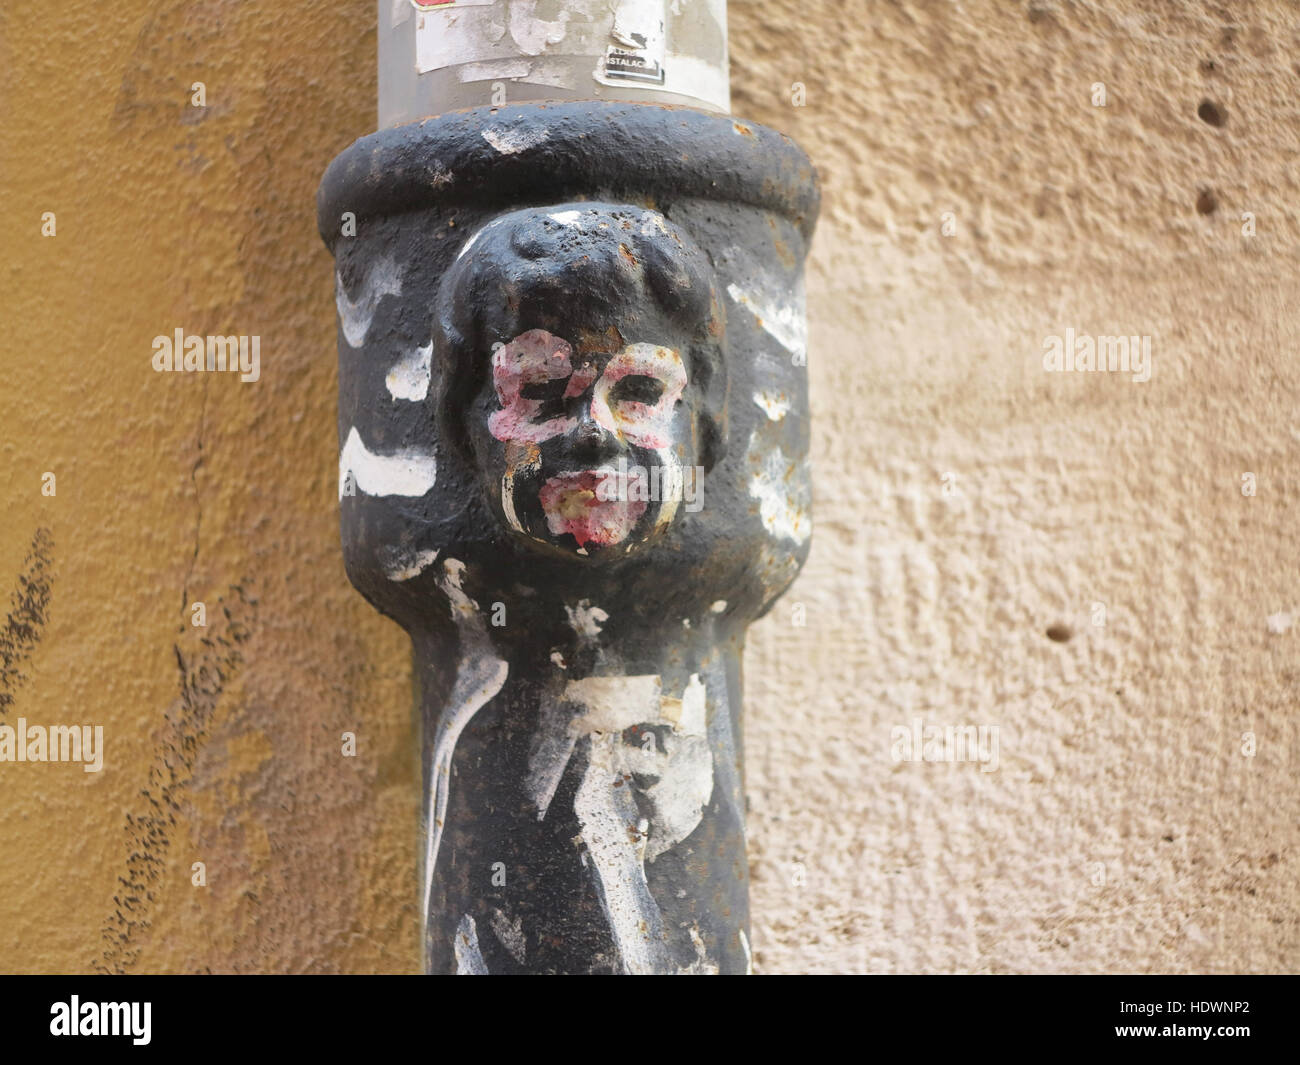 Decorated face on drainpipe in Valencia, Spain Stock Photo